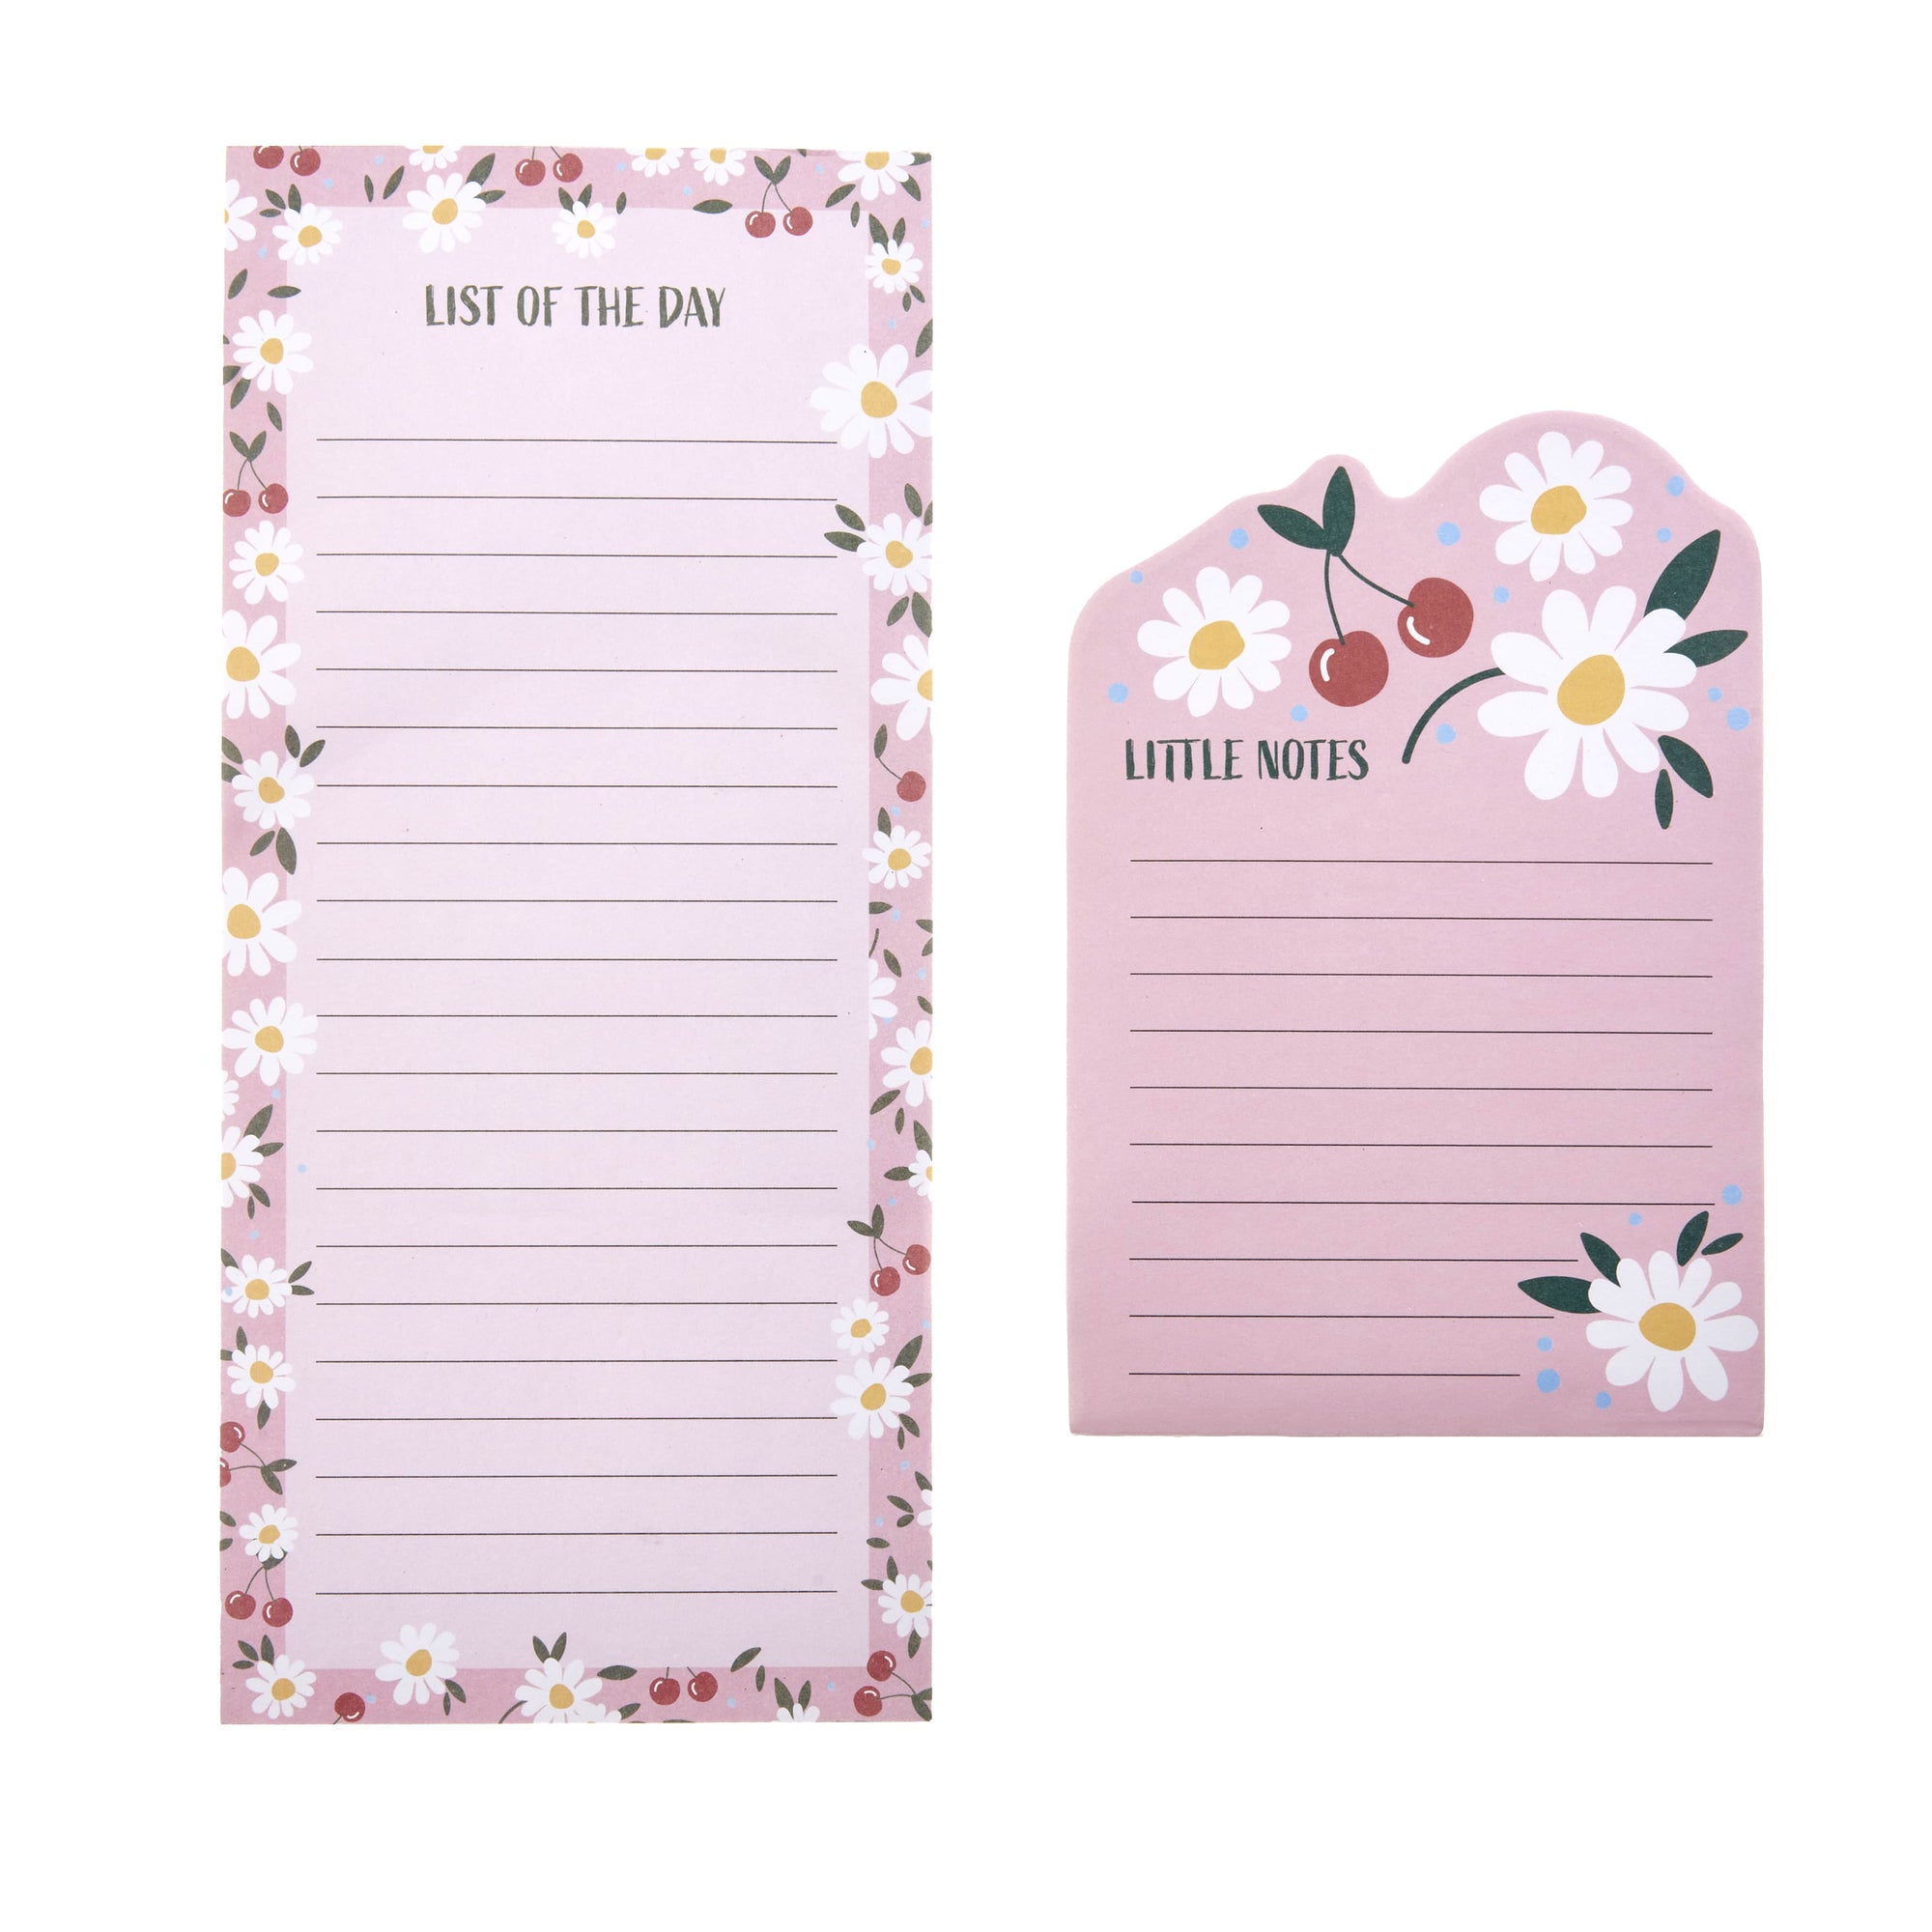 Floral List of the Day + Little Notes Notepad Set Gartner Studios Notepads 94526